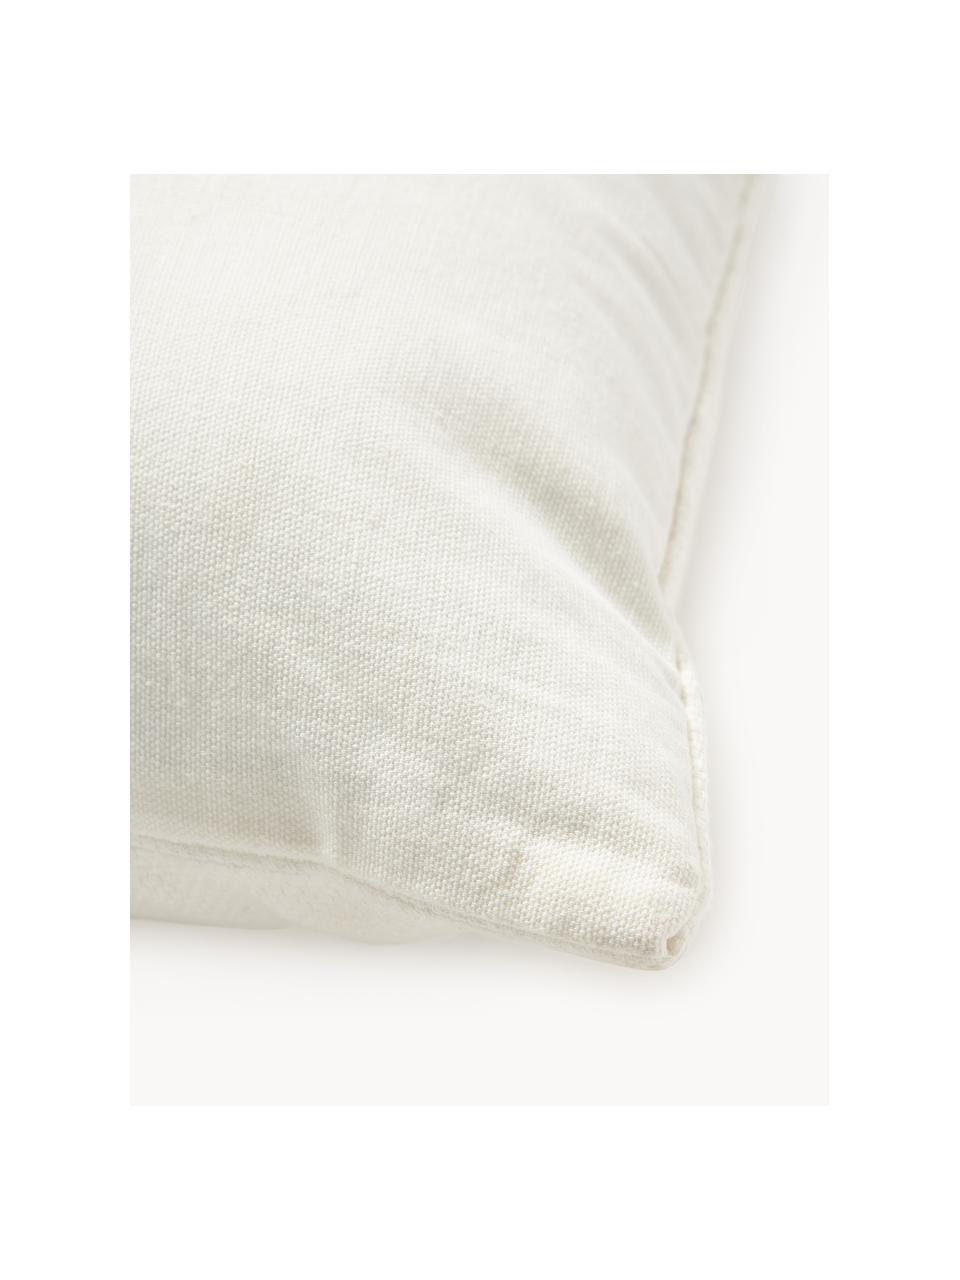 Bestickte Baumwoll-Kissenhülle Bardia, Bezug: 100 % Baumwolle, Beige, Off White, B 45 x L 45 cm